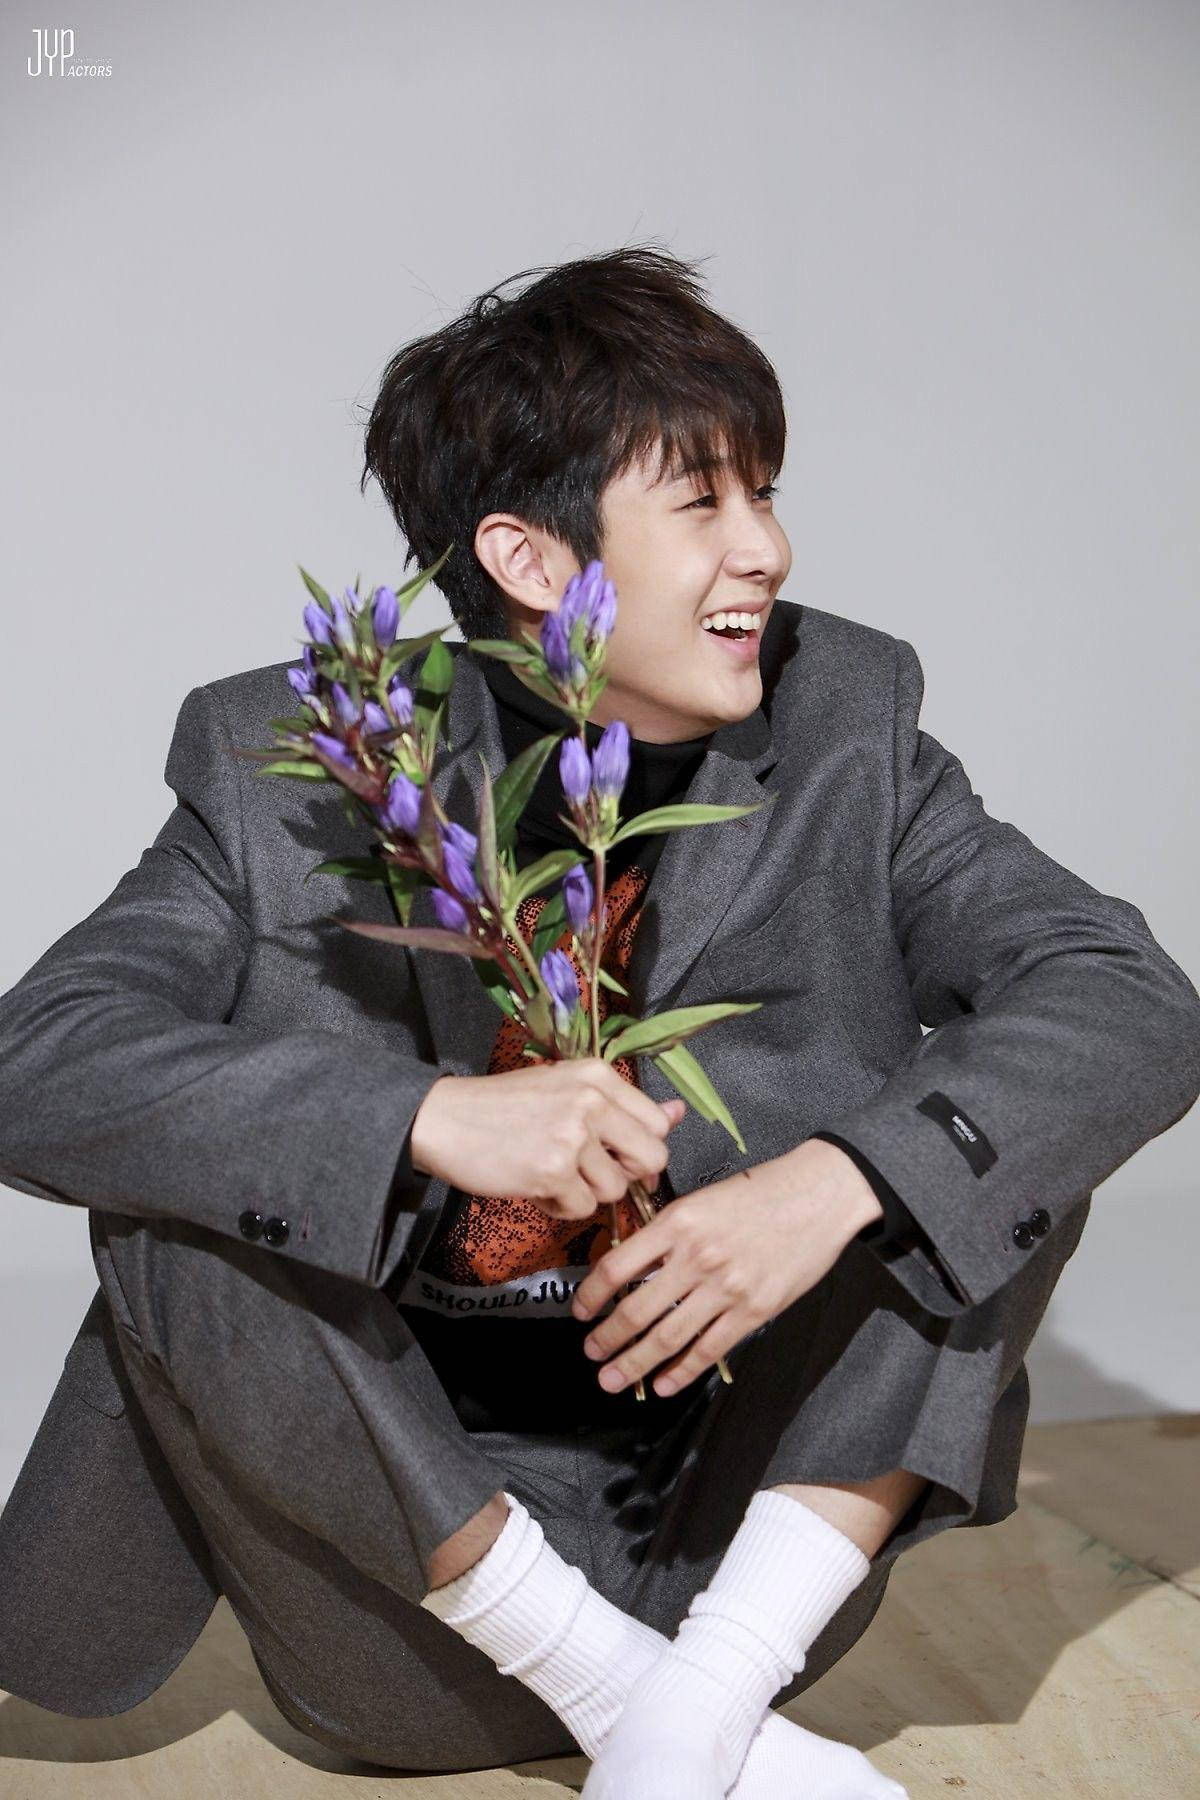 Choi Woo Shik Sweet Smile Background